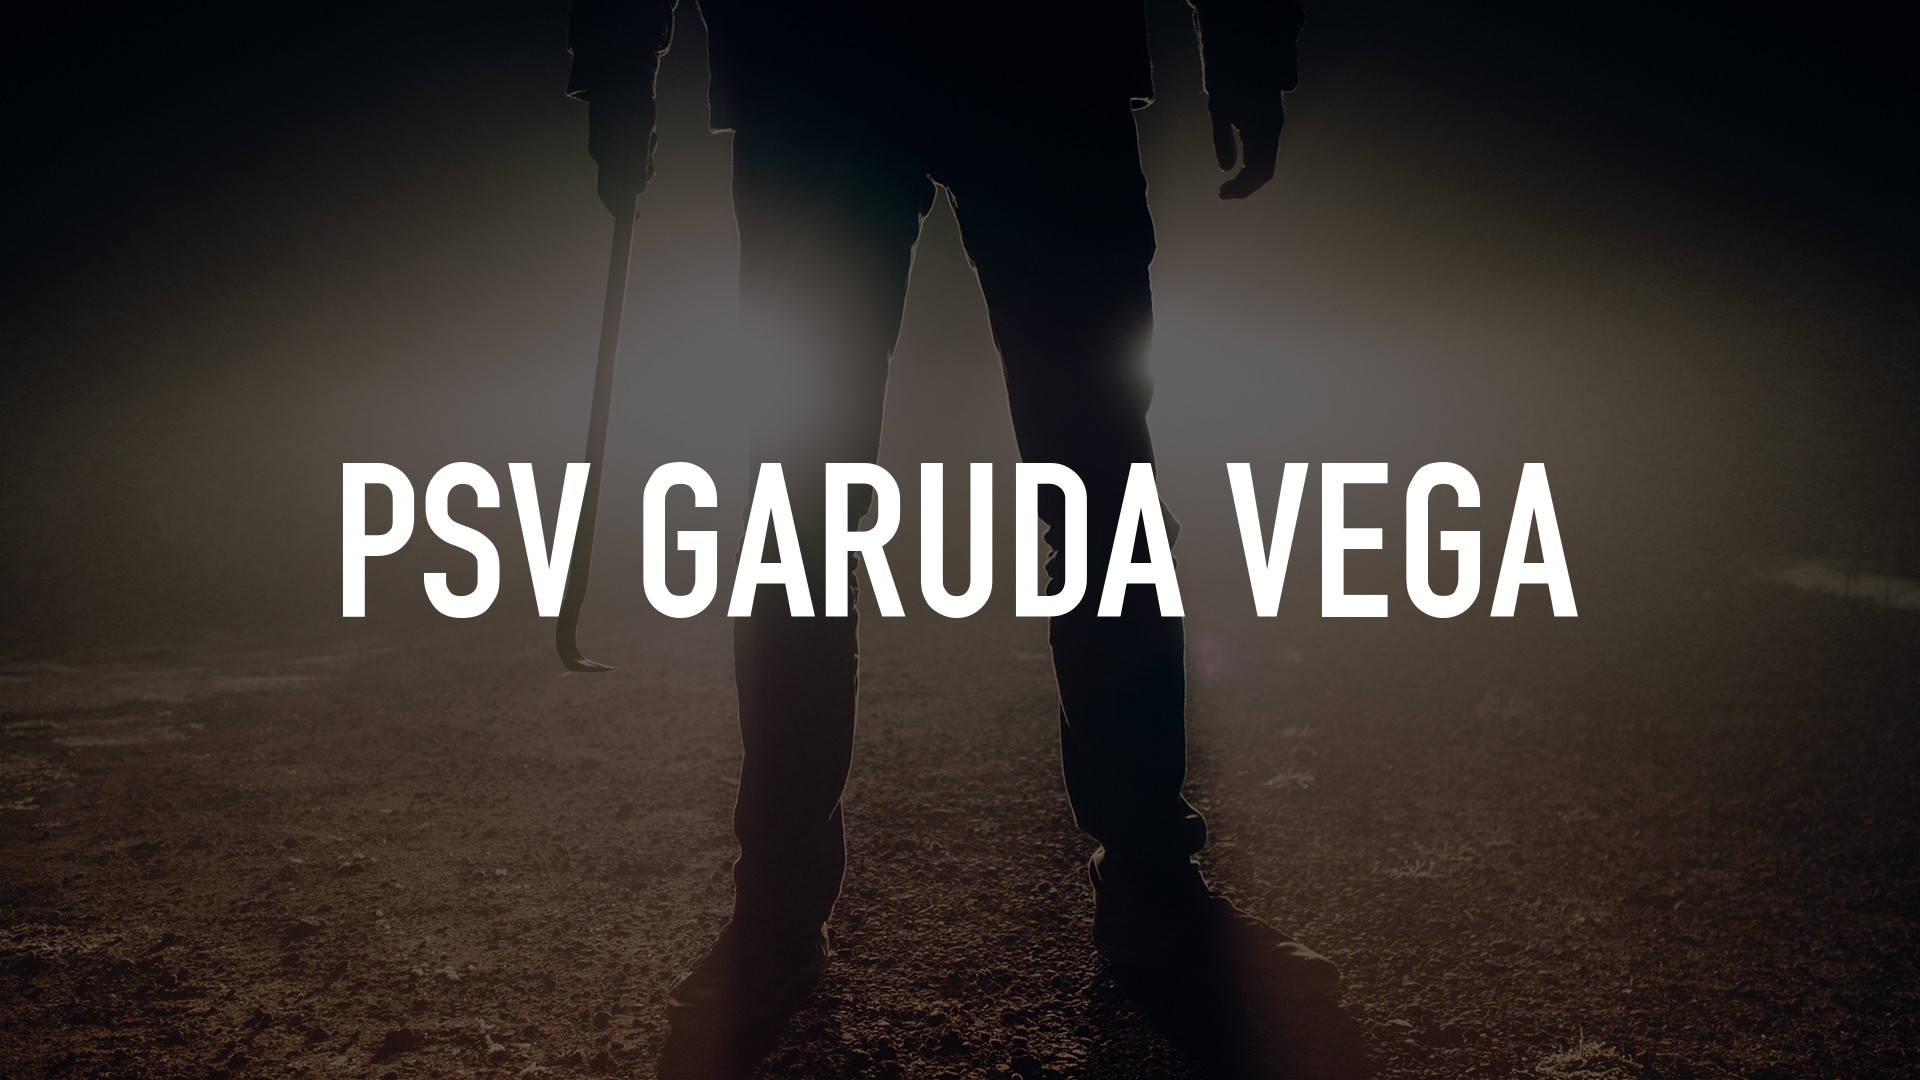 Download The Script Of PSV Garuda Vega